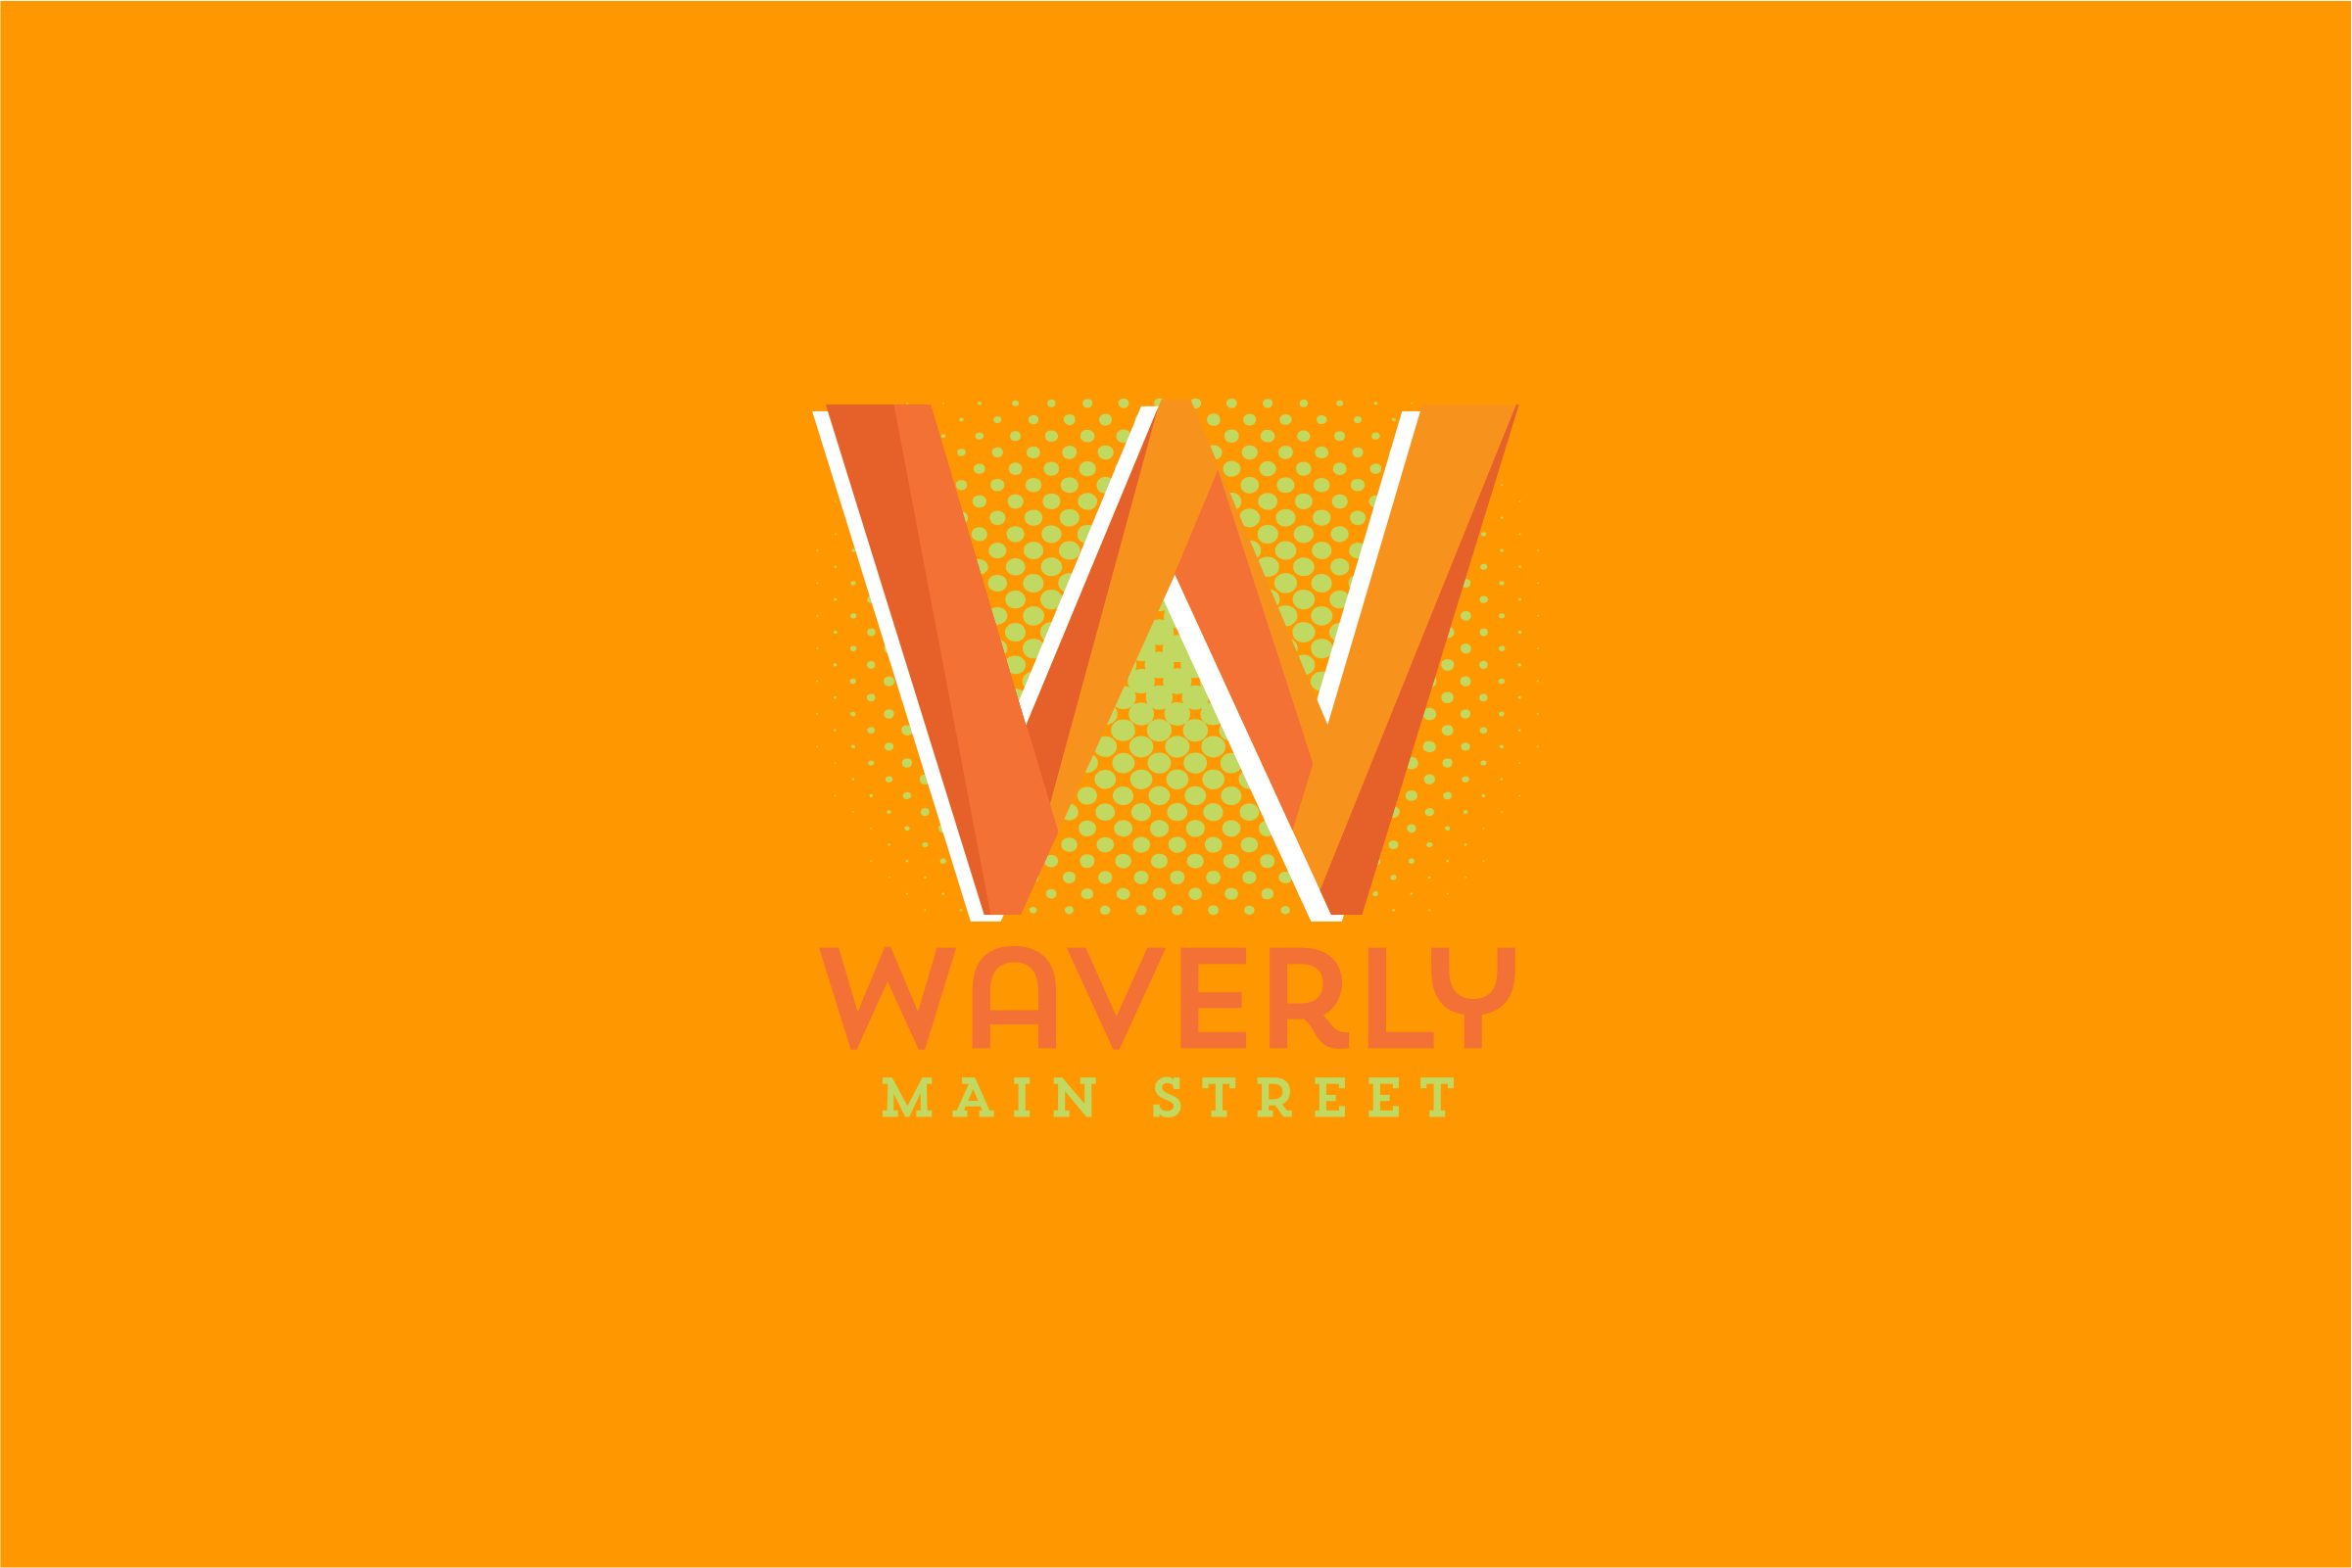 Waverly Main Street